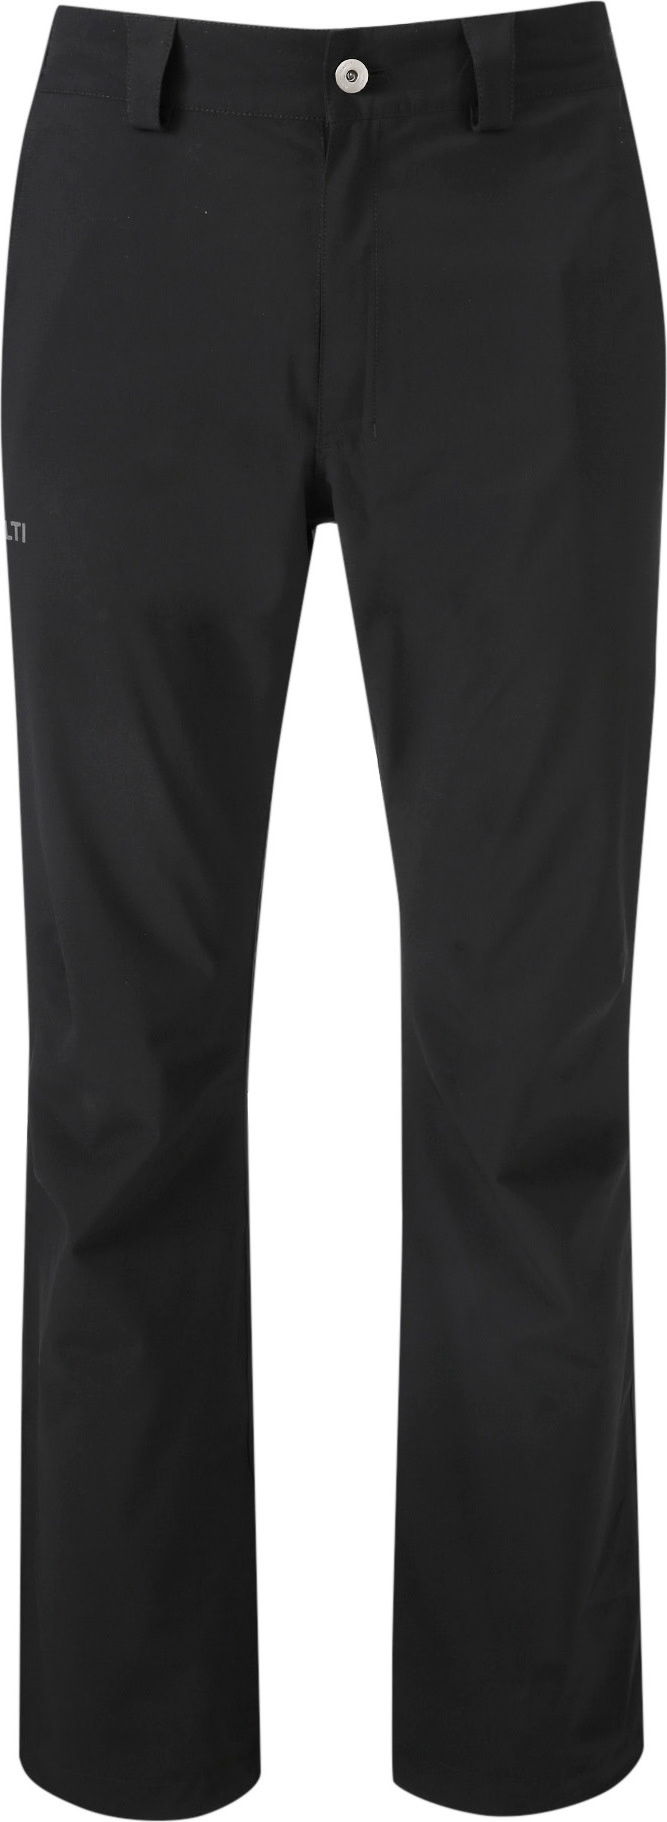 Men’s Vuoksi Recy Drymaxx Shell Pants Black